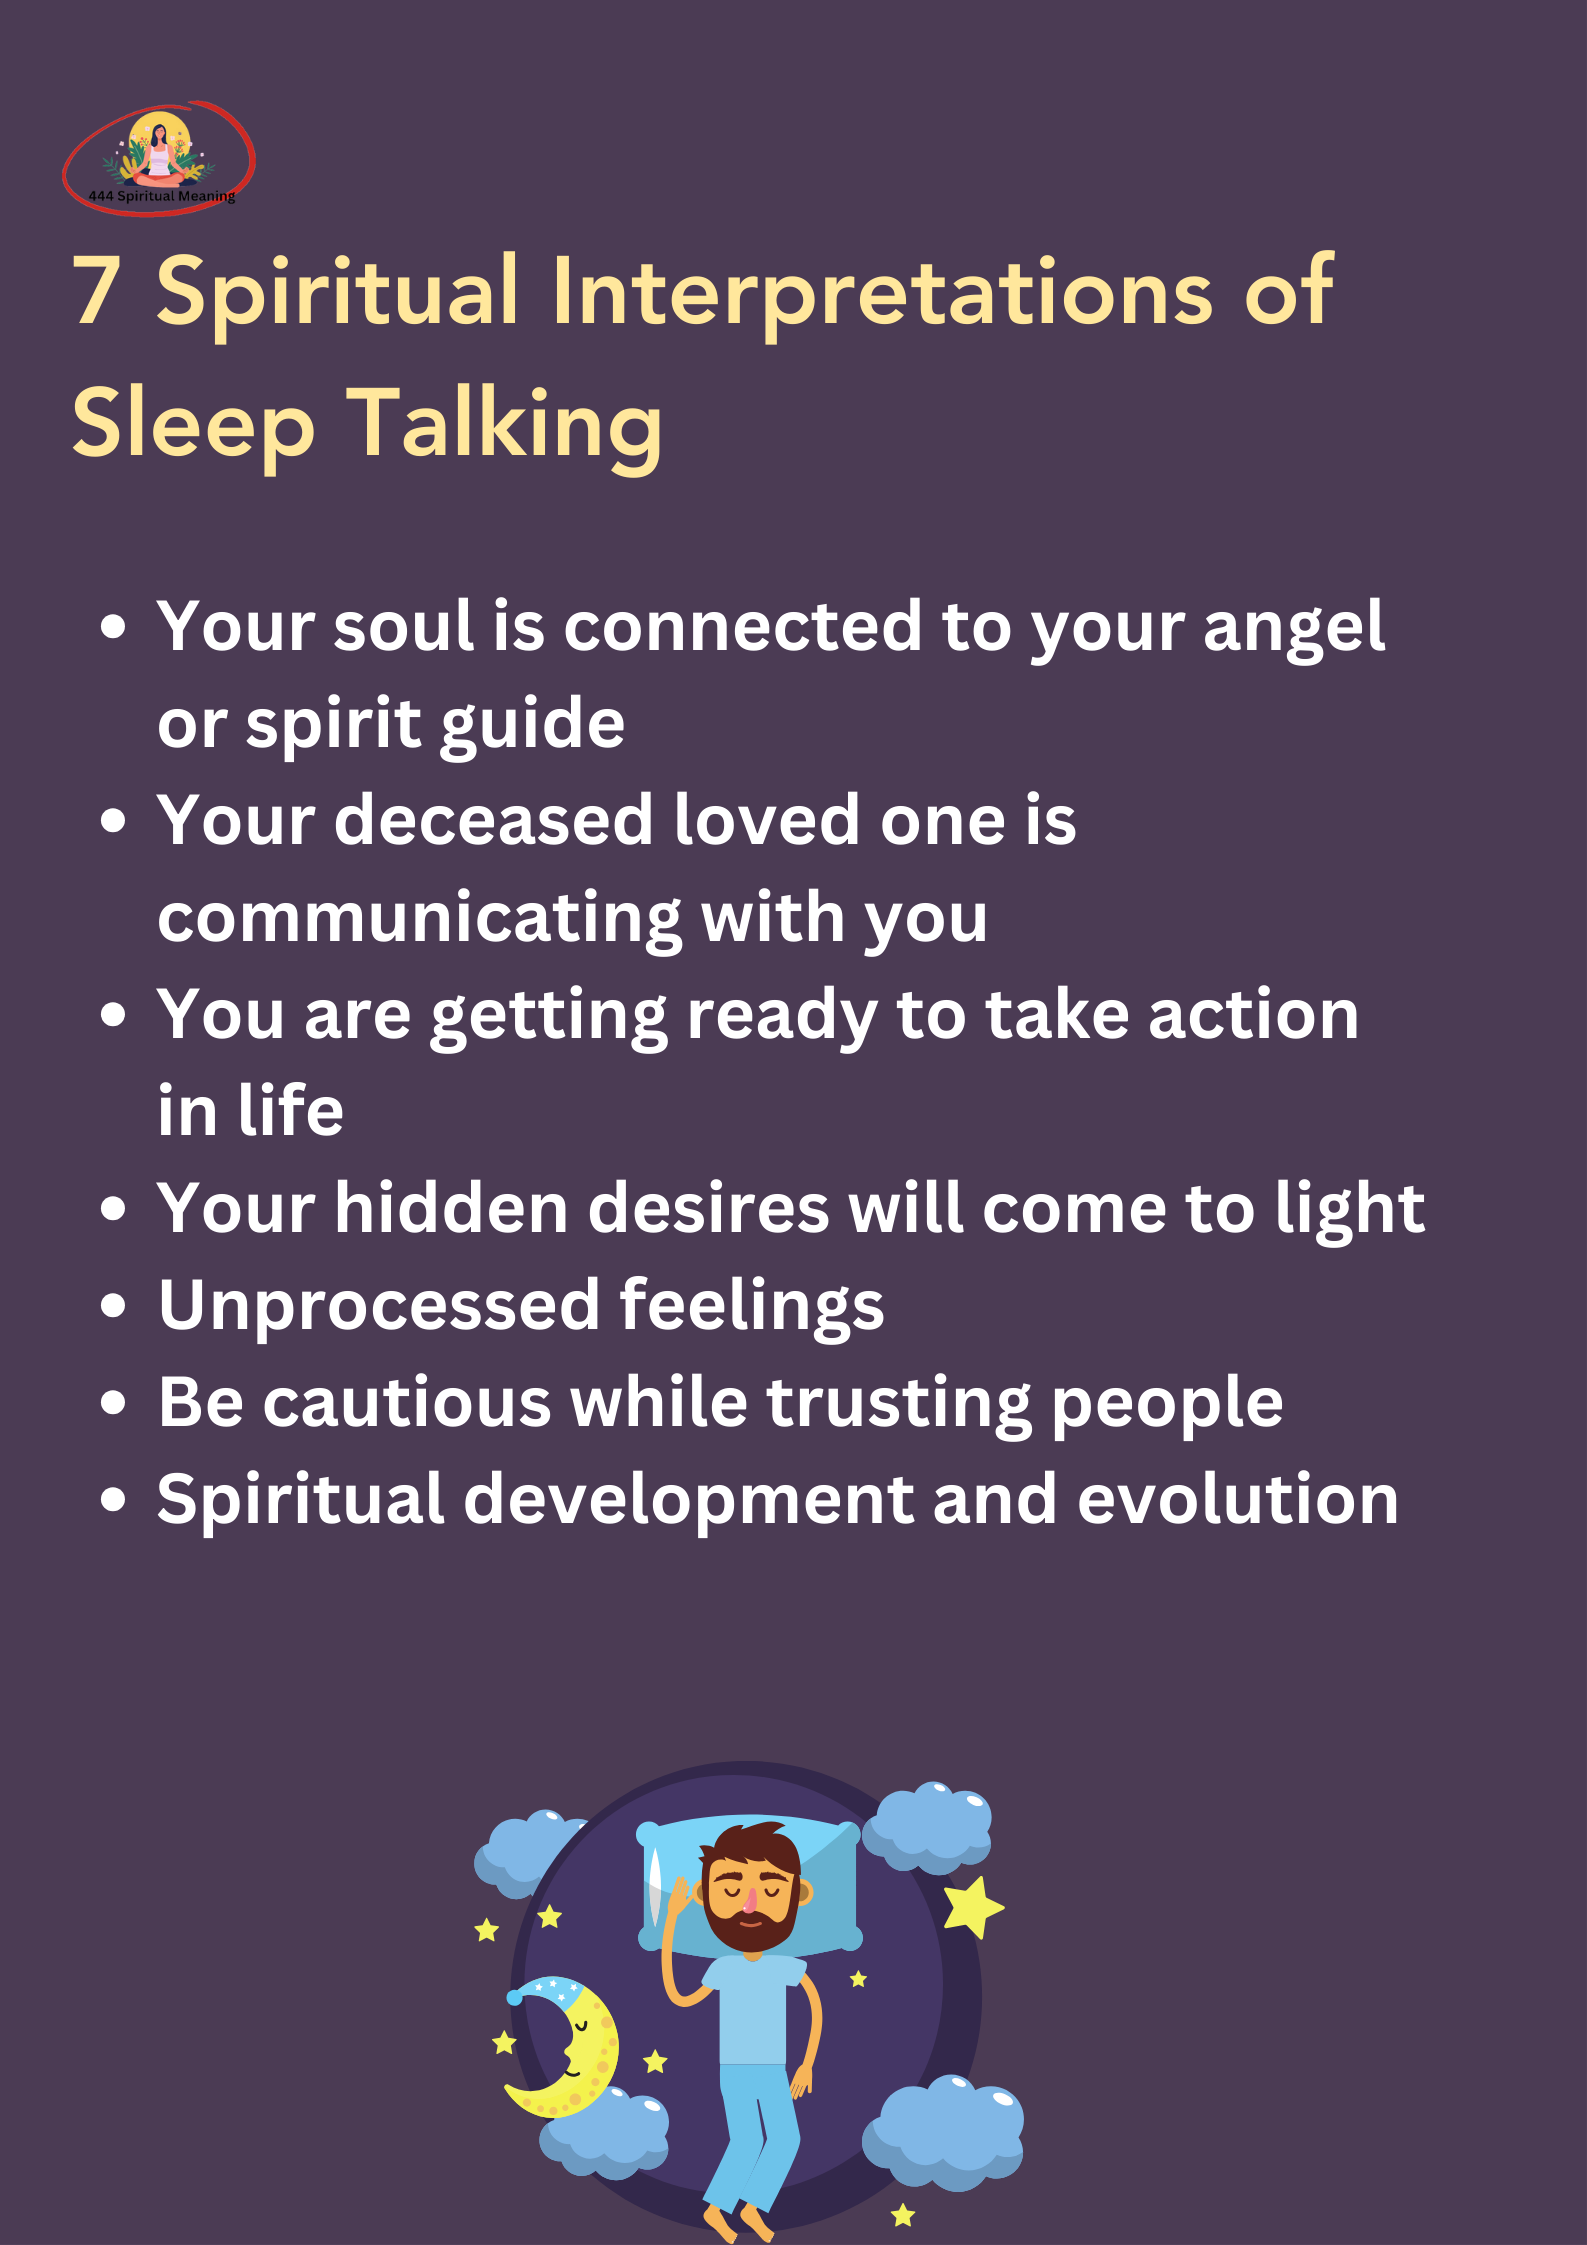 7 Spiritual Interpretations of Sleep Talking